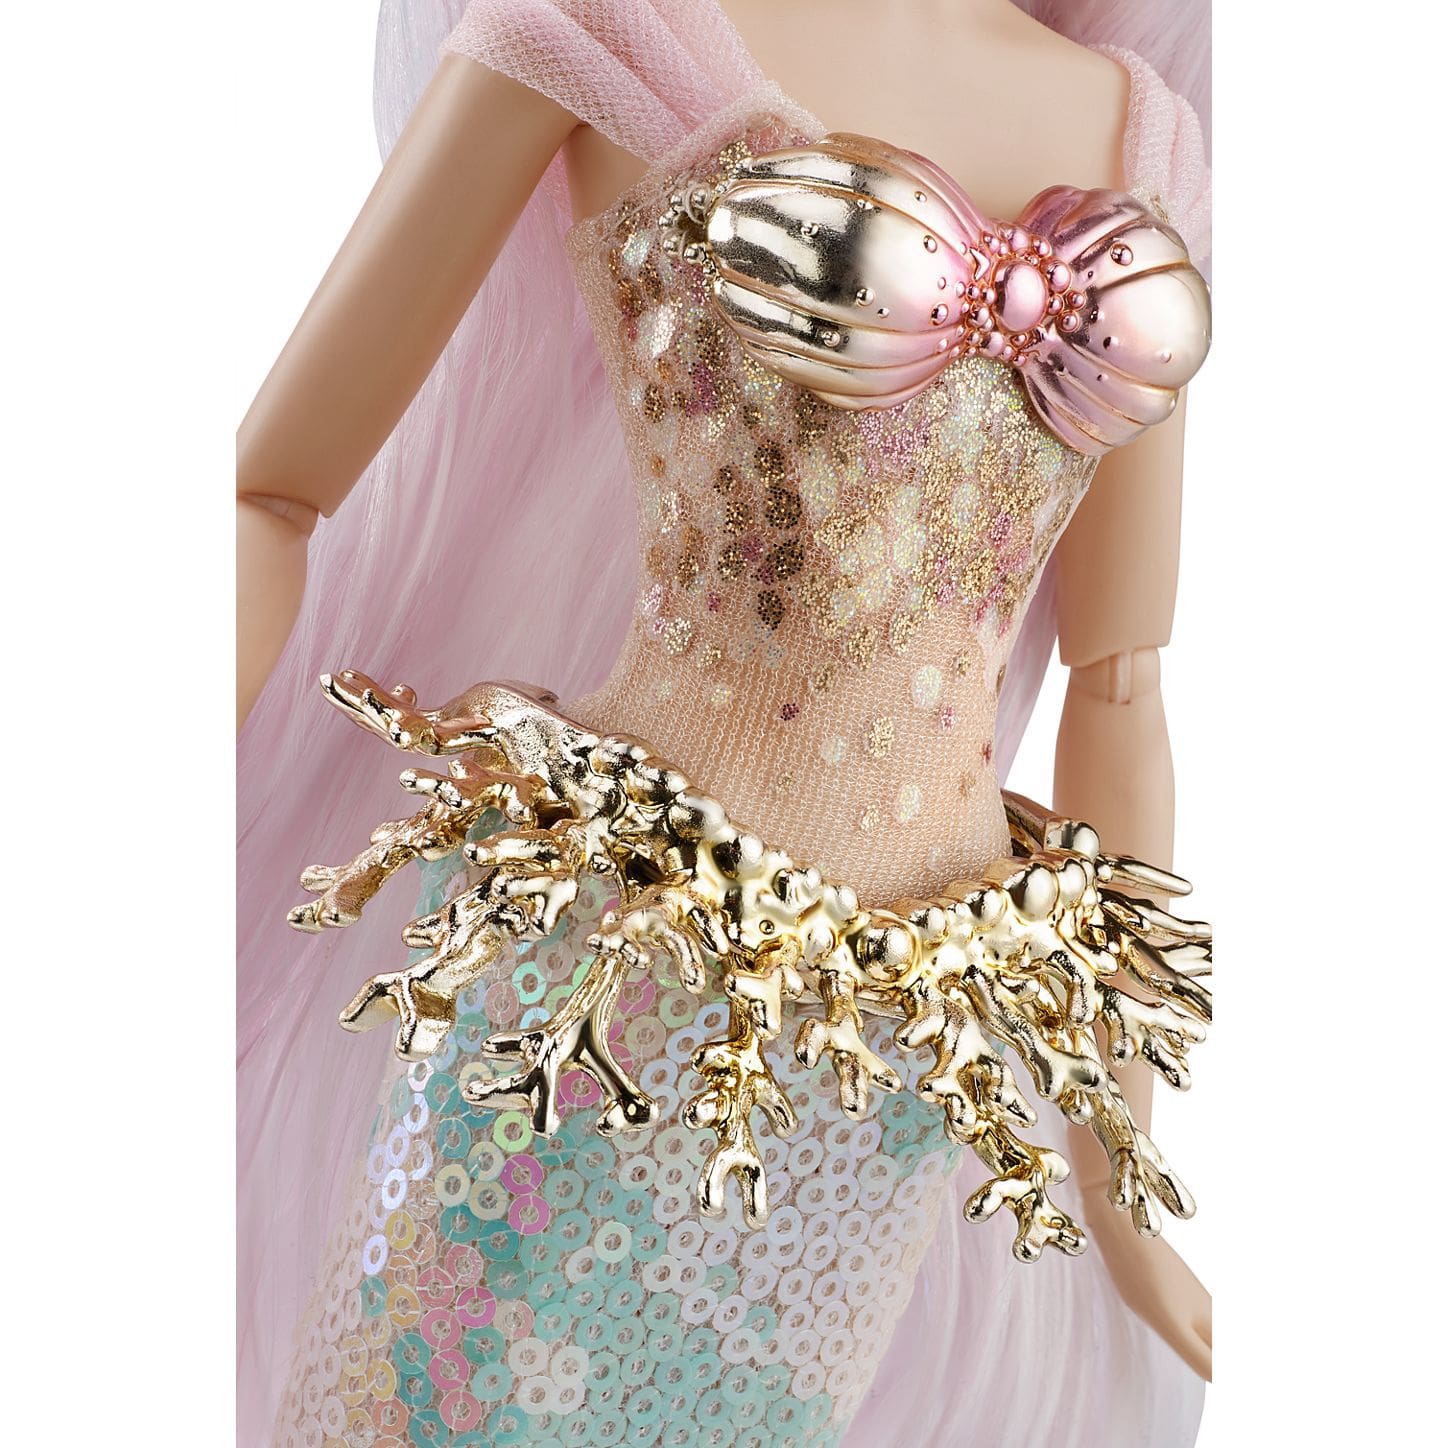 Mermaid Gown 2013 Barbie Doll for sale online | eBay